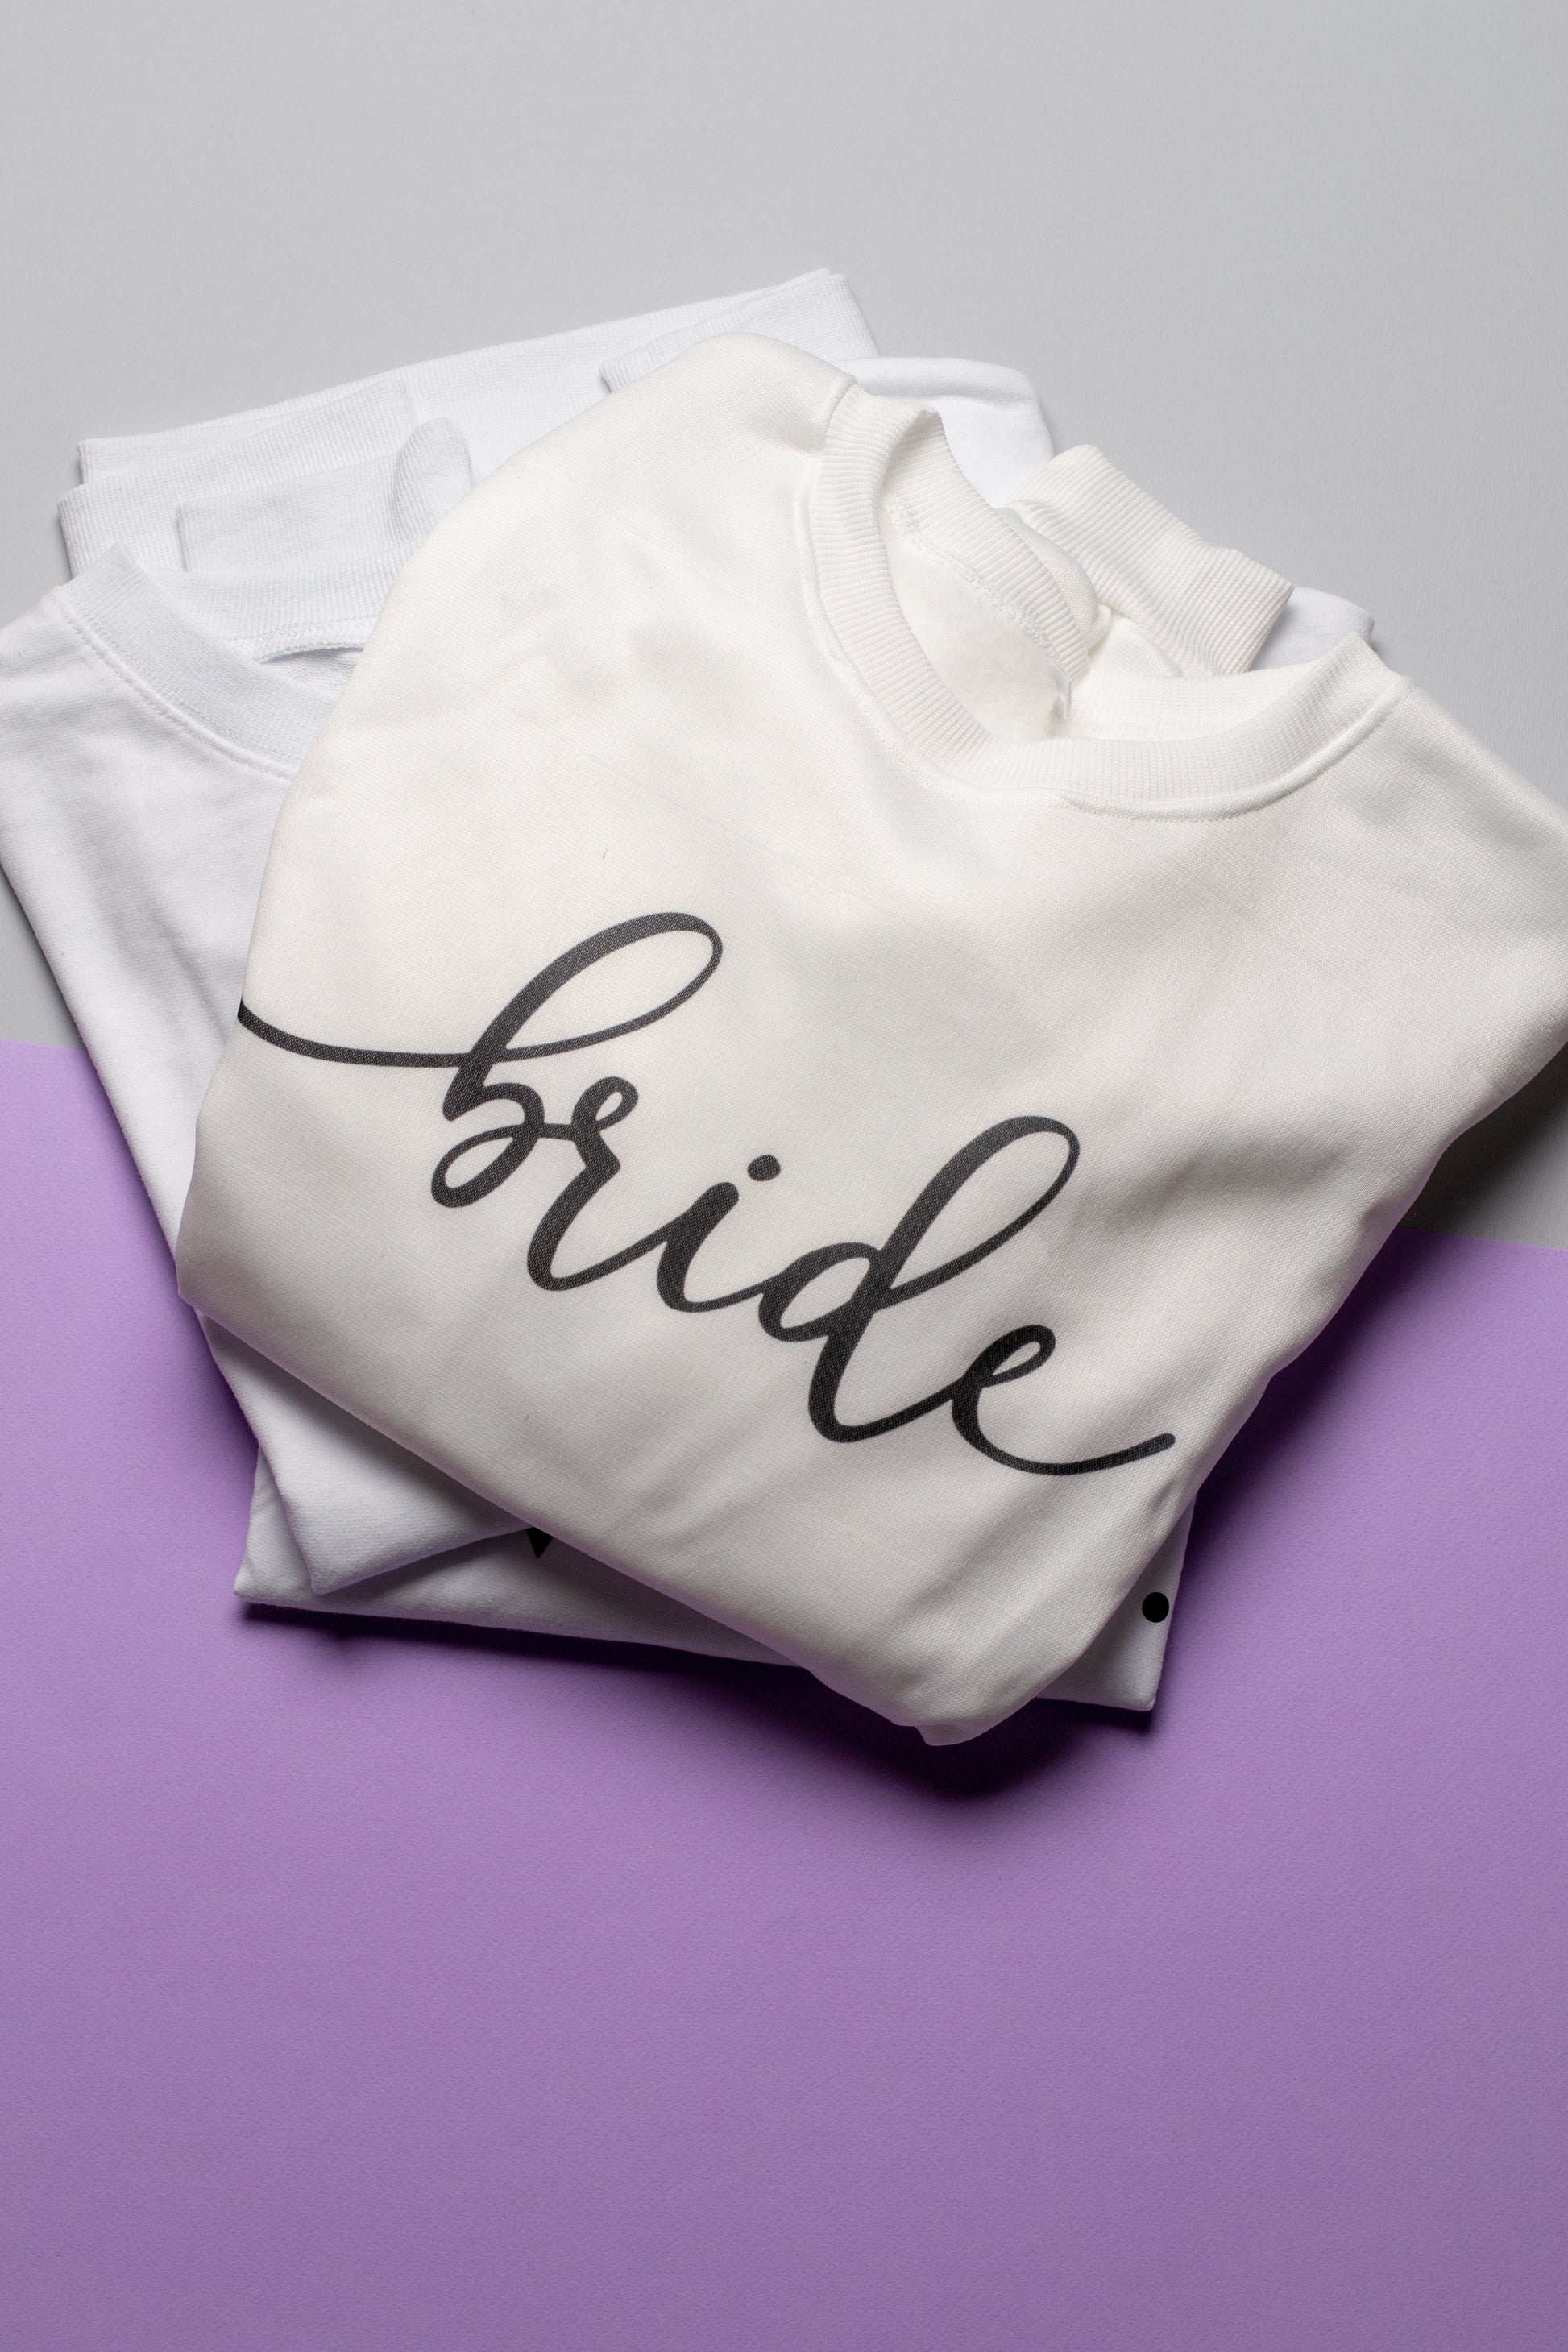 Sudadera blanca manga larga "bride" letras negras para la novia. Ideal para despedida de soltera o de camino a tu honeymoon.